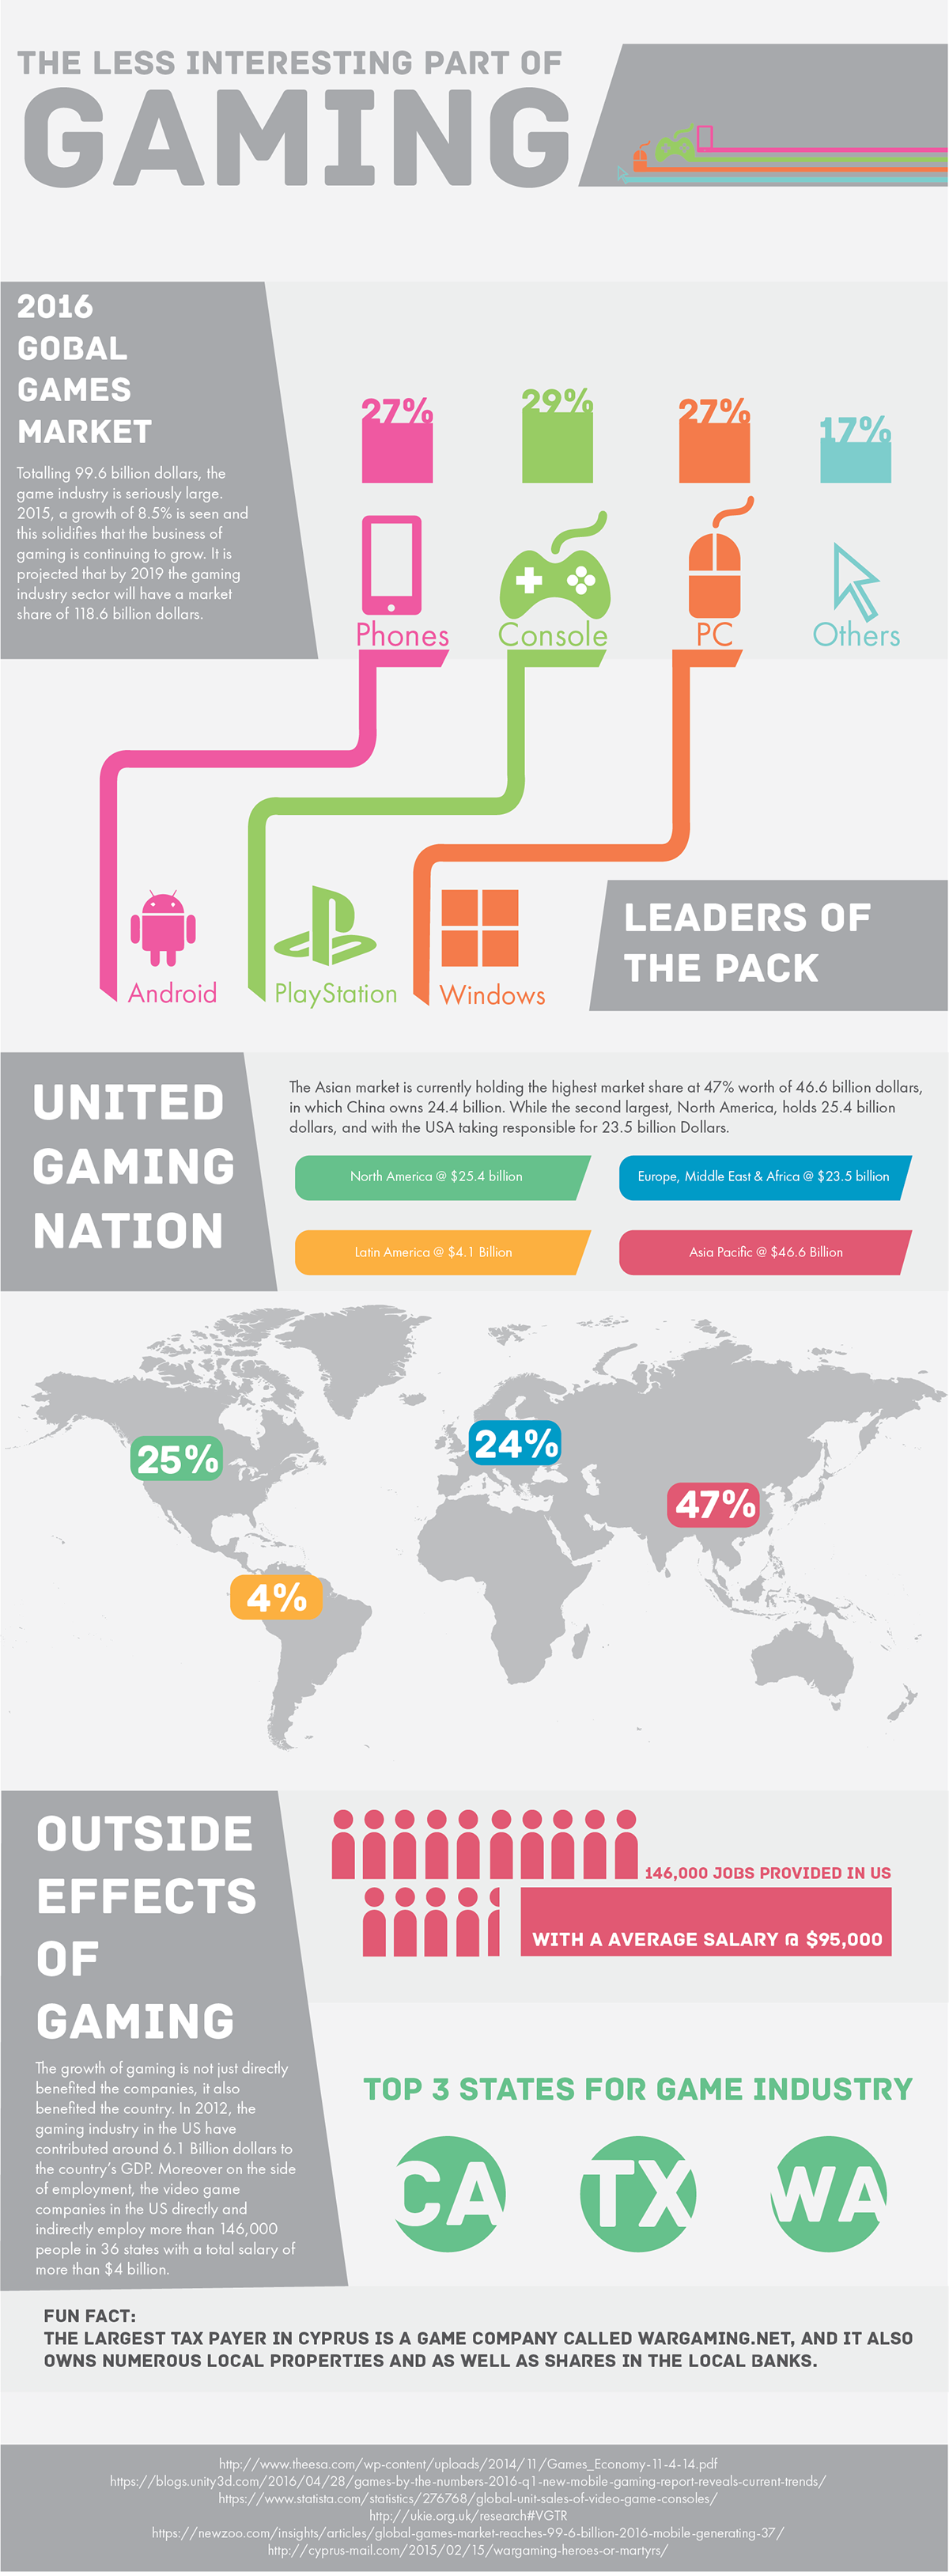 infographic Data economy Gaming Industry